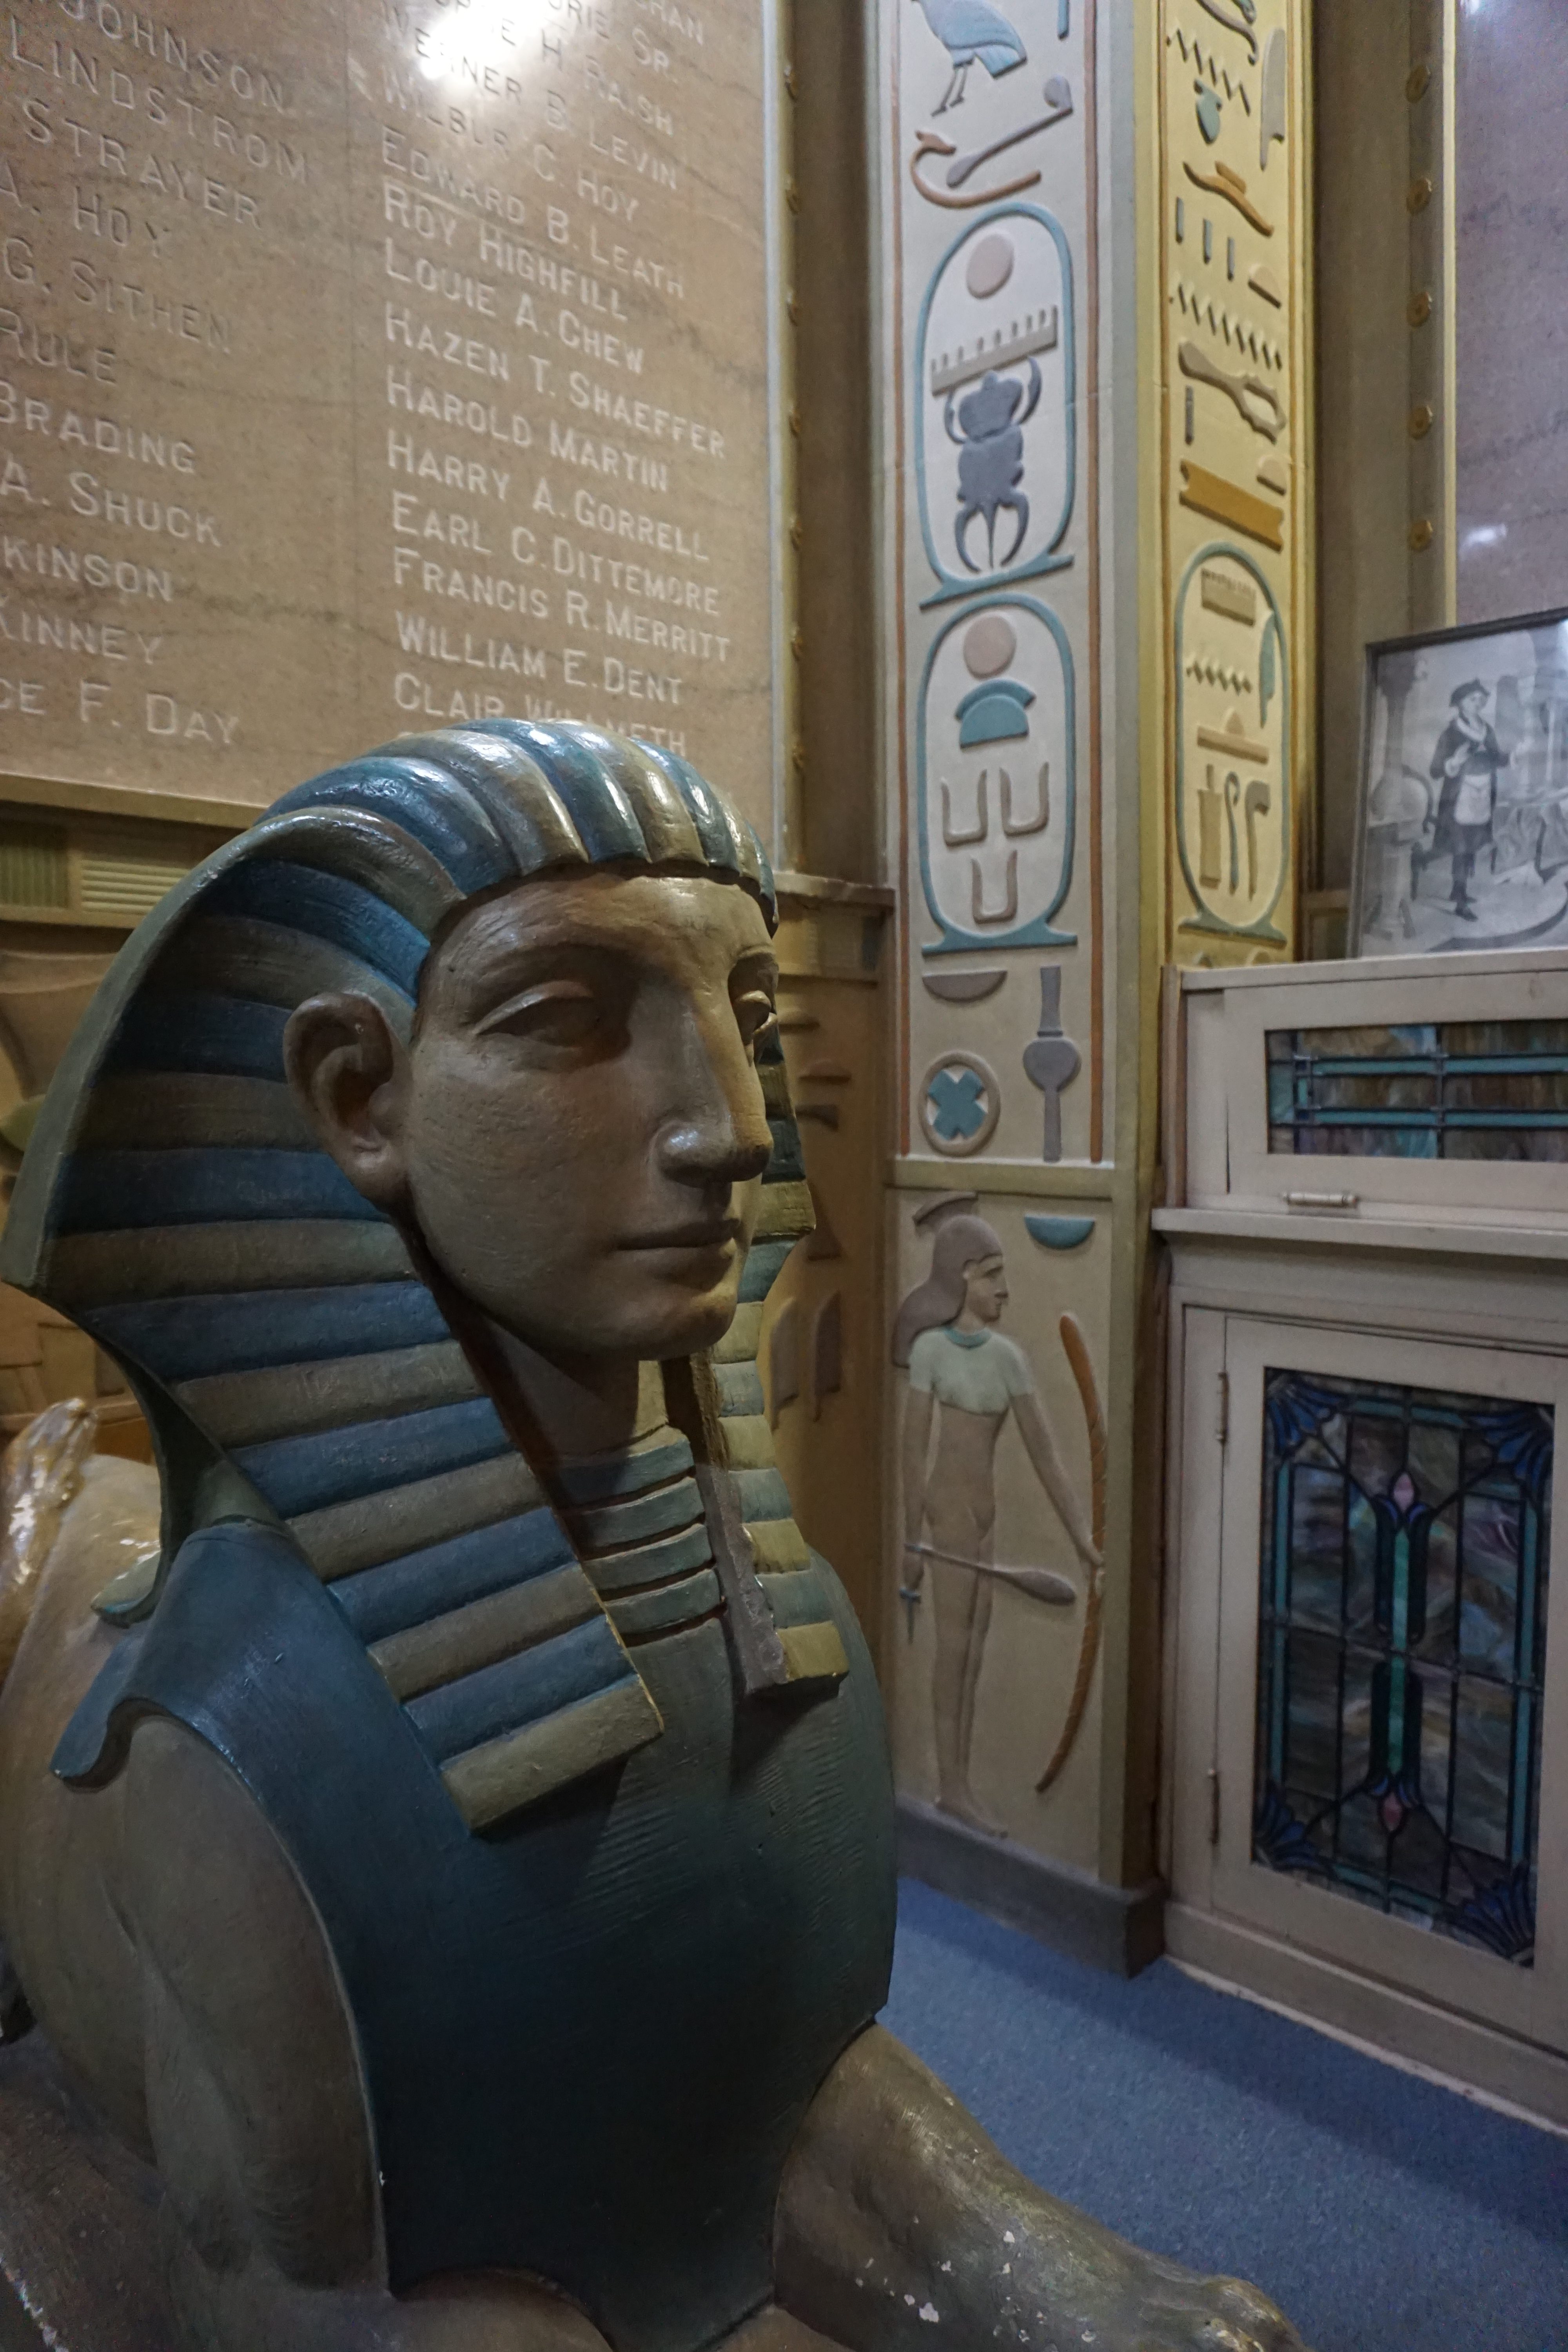 Egyptian Room, Masonic Temple, Atchison, KS | Egyptology at Johnson